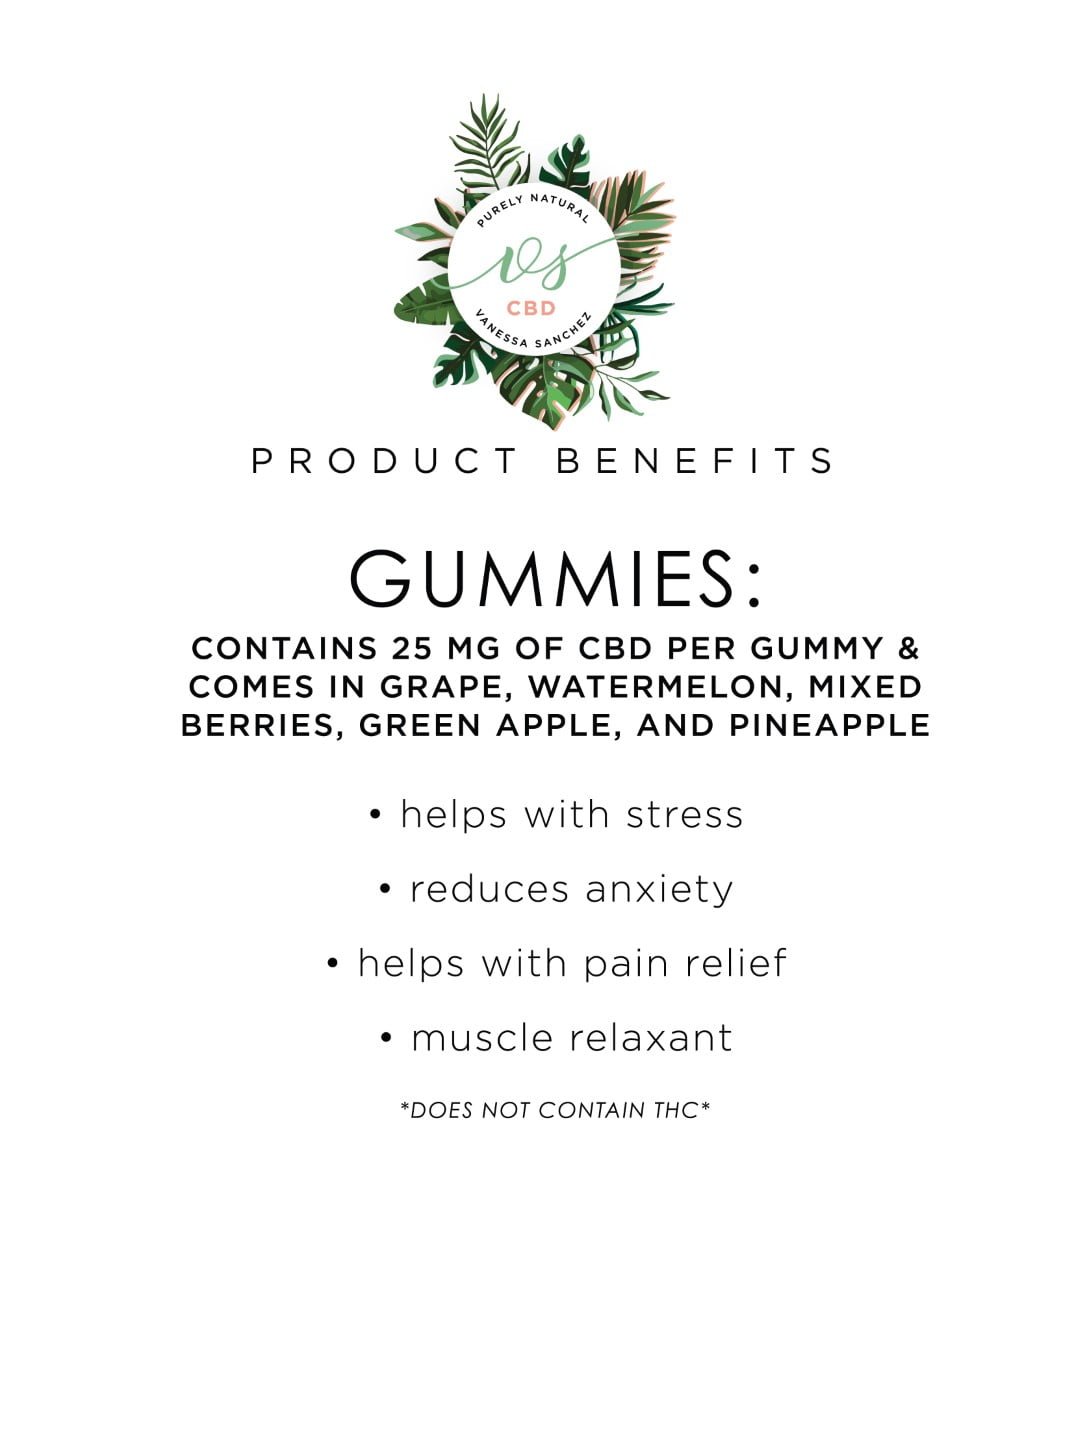 gummies benefits-01 (Large)